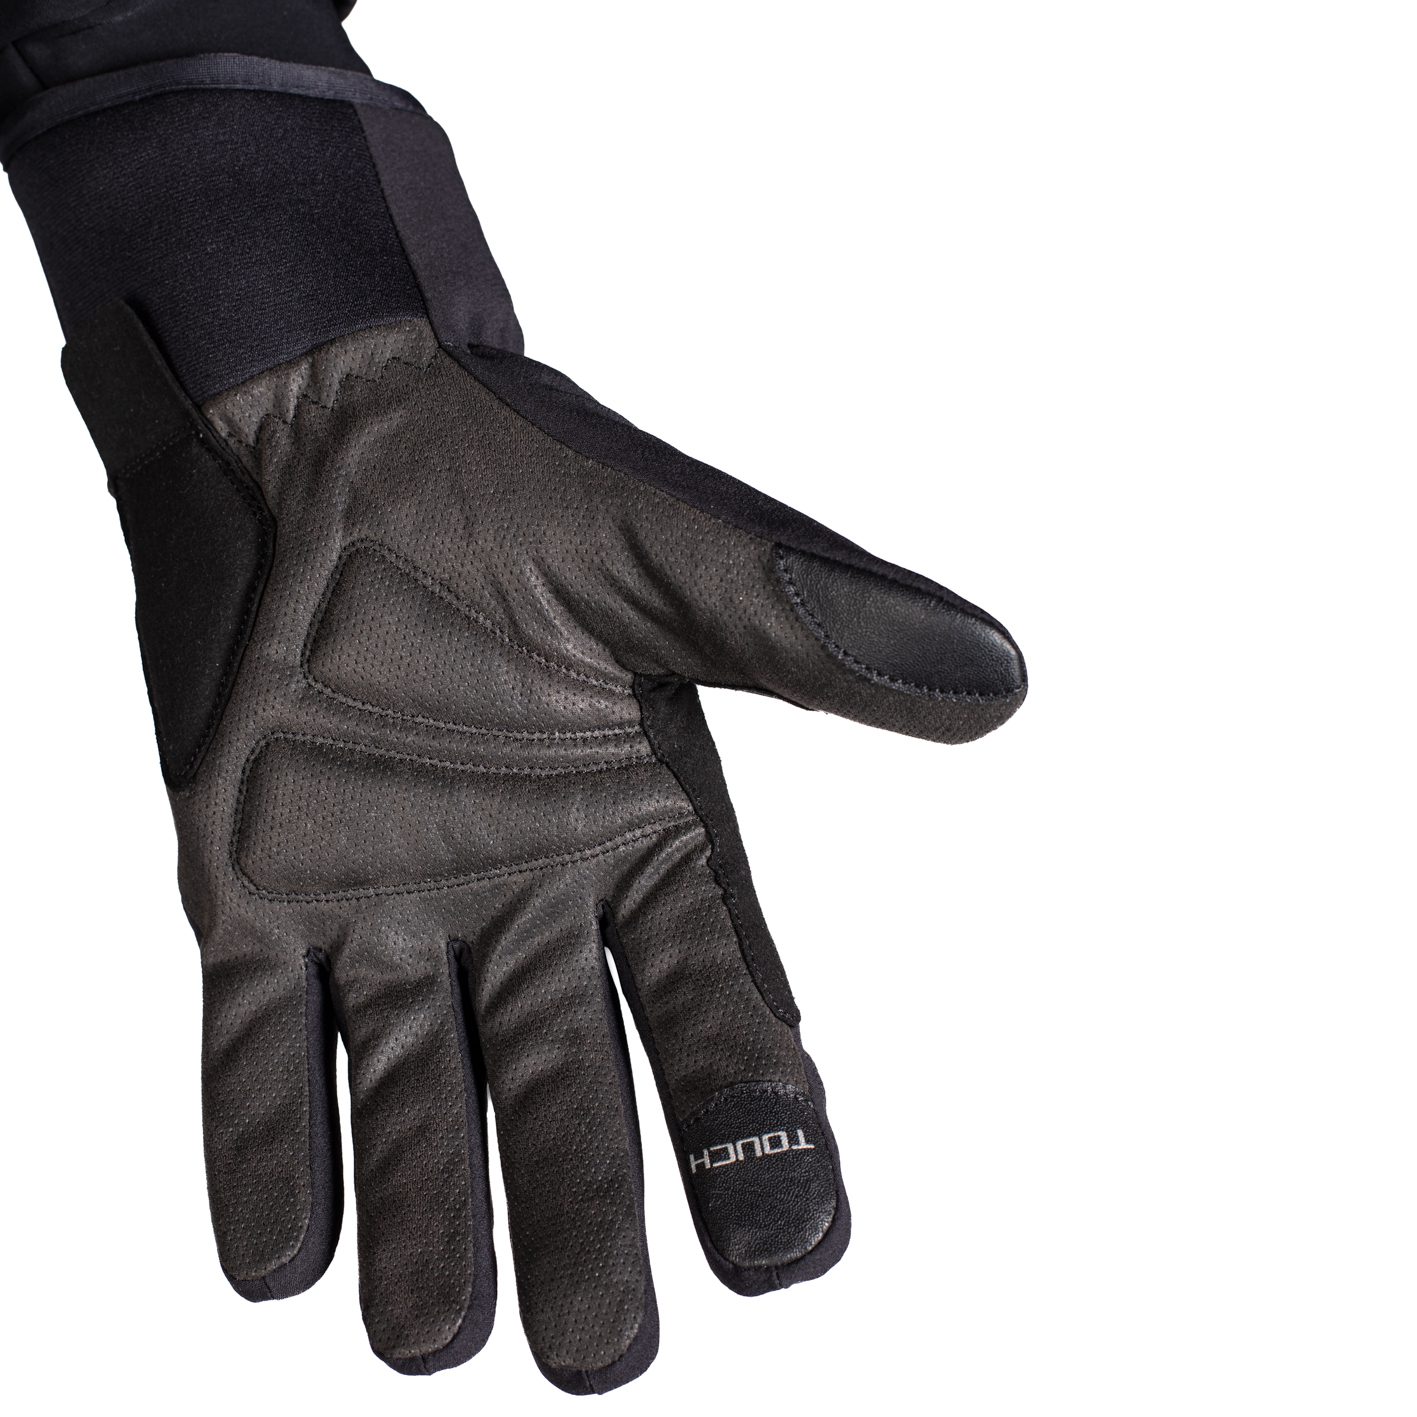 Rain Pro Gloves | Bioracer